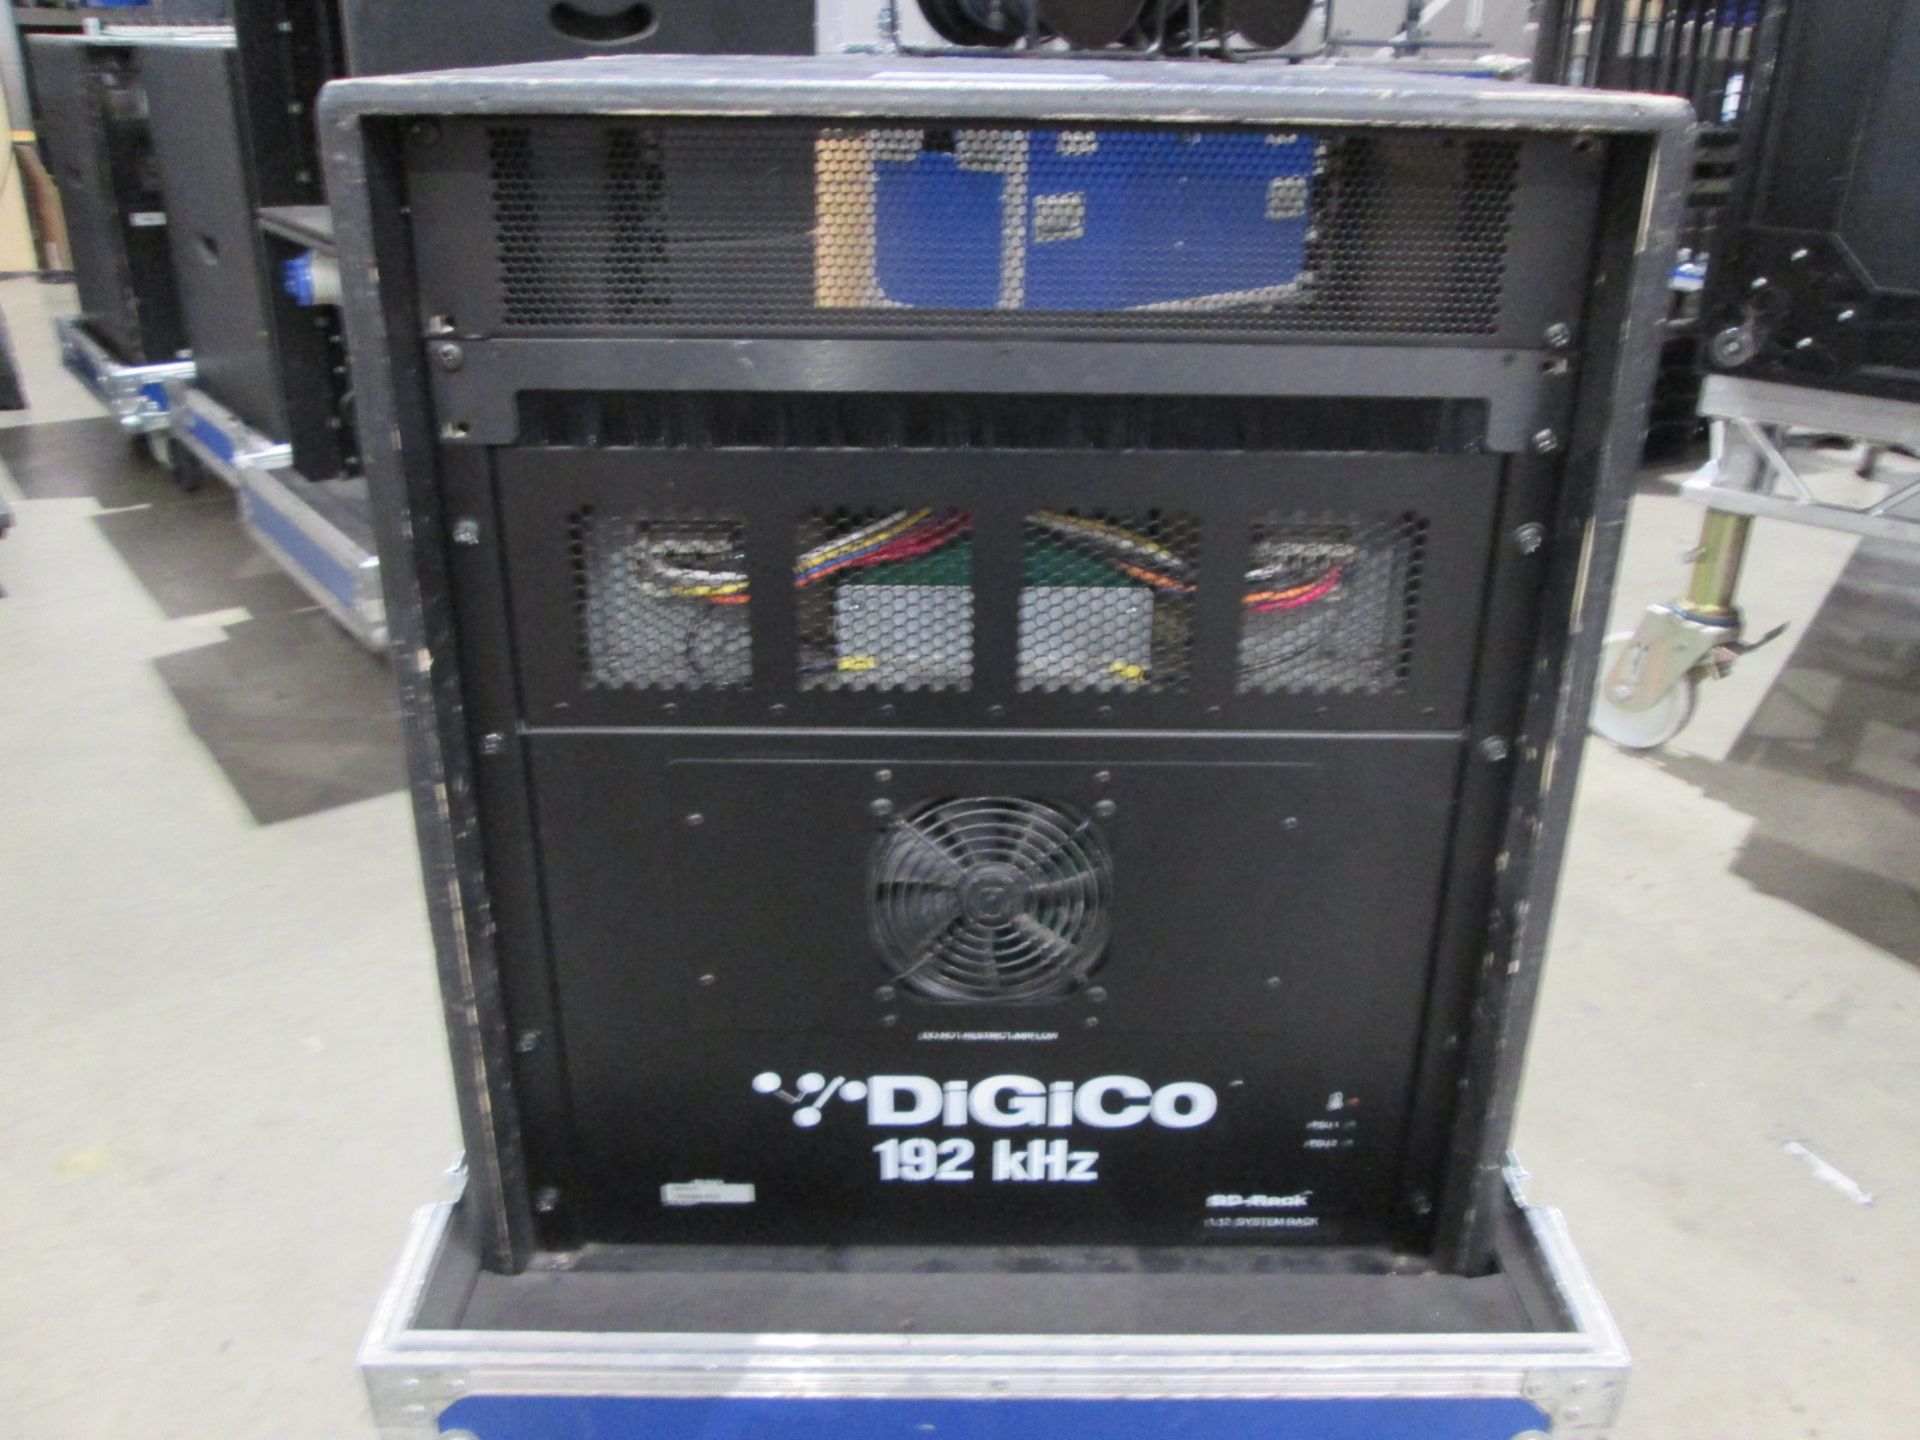 DigiCo 192 kHz SD-Rack Digital Input / Output Frame. S/N 773138 1712